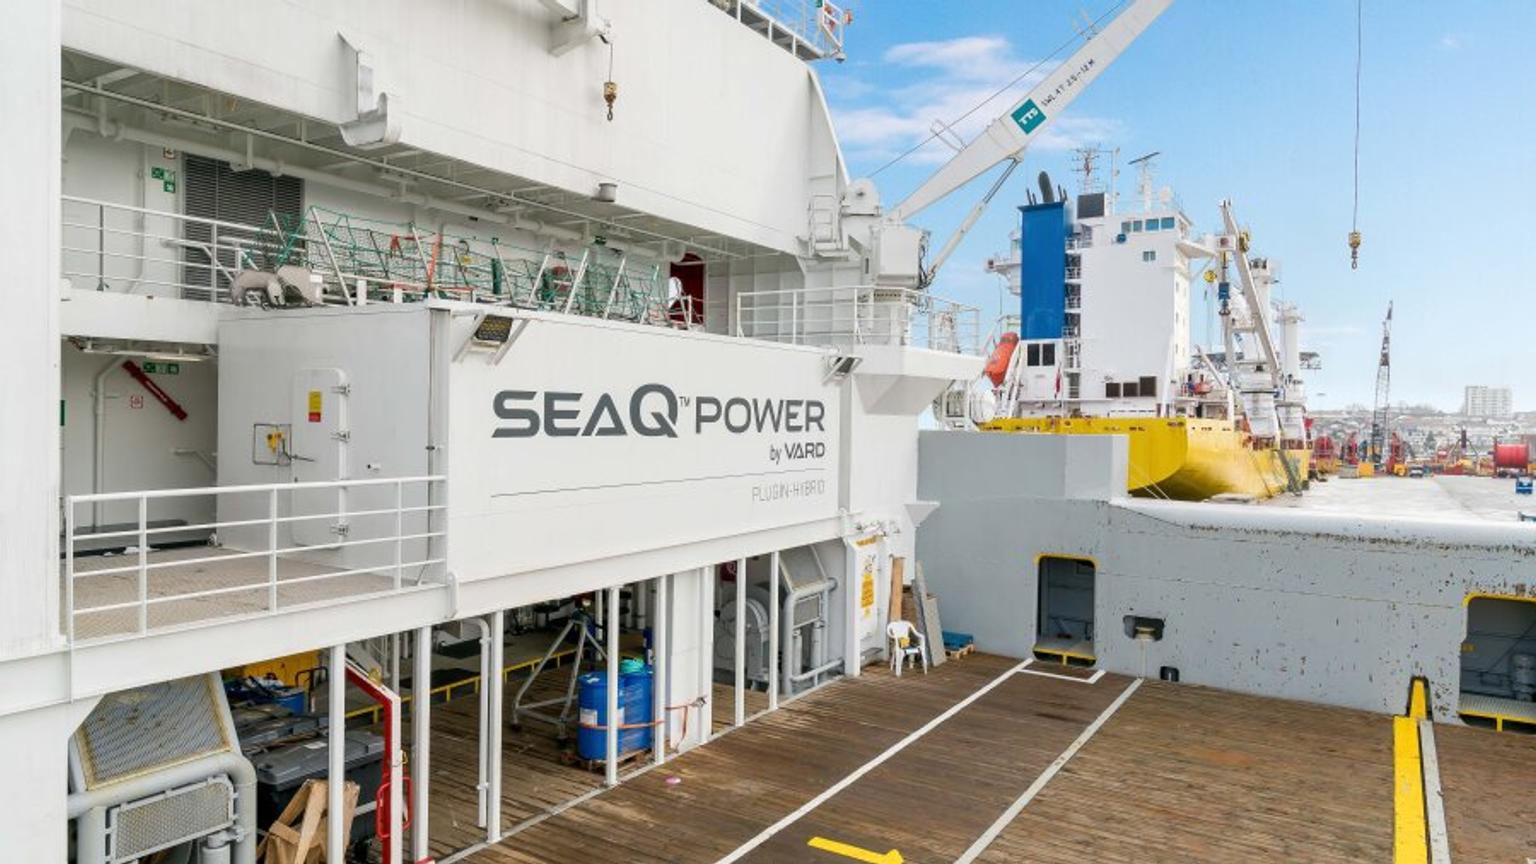 SeaQ energy storage